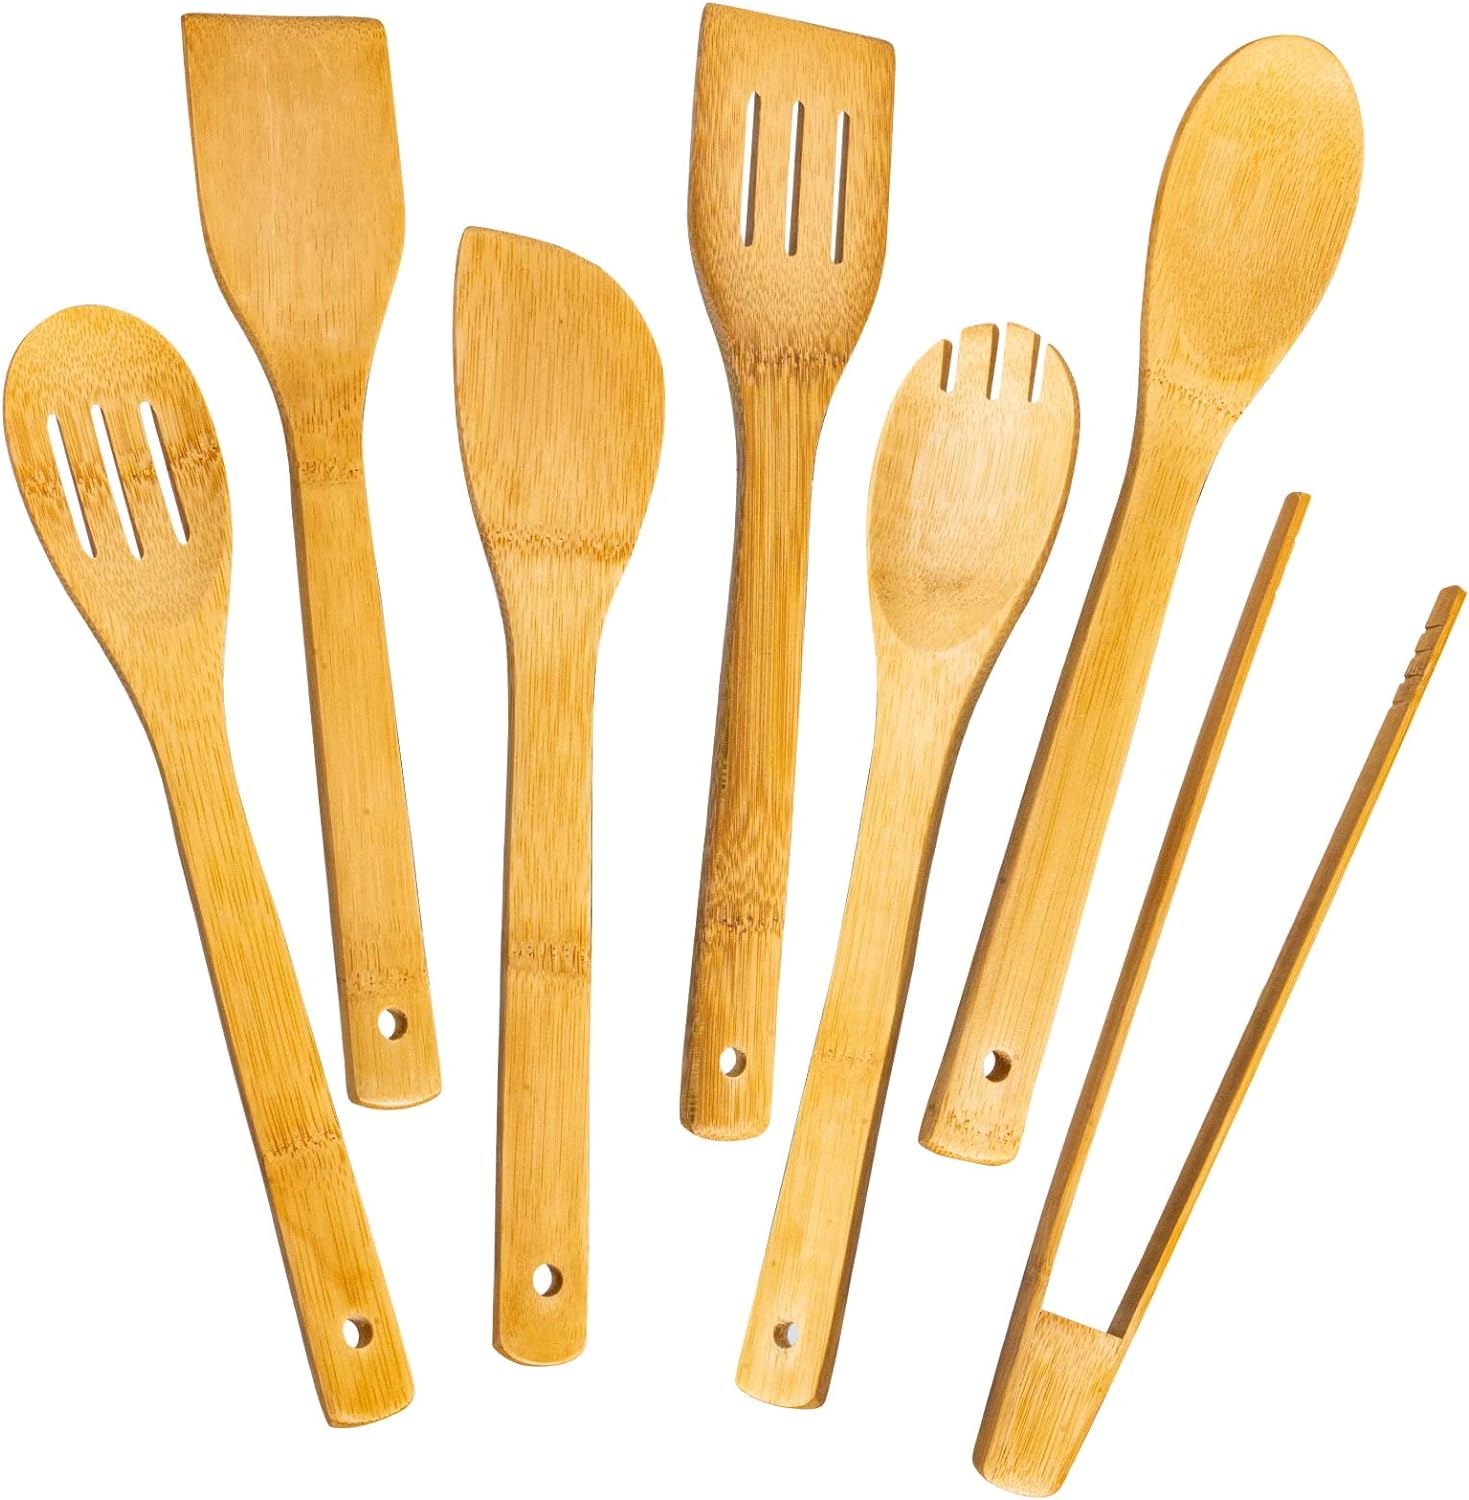 renexas 9 pcs wooden spoons for cooking utensils, natural teak